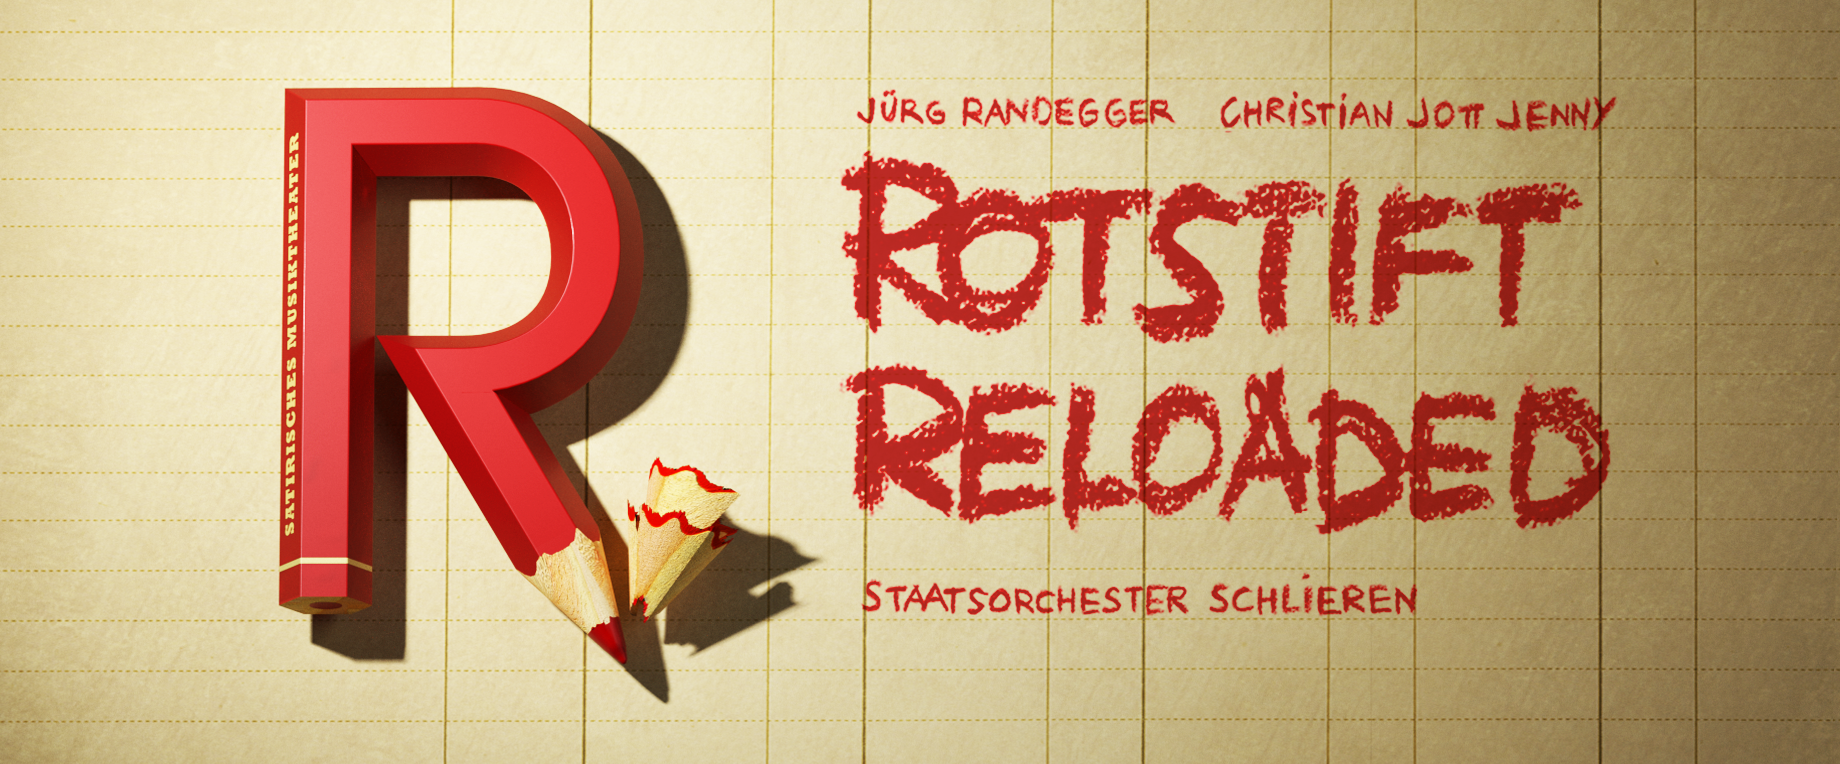 Rotstift Reloaded